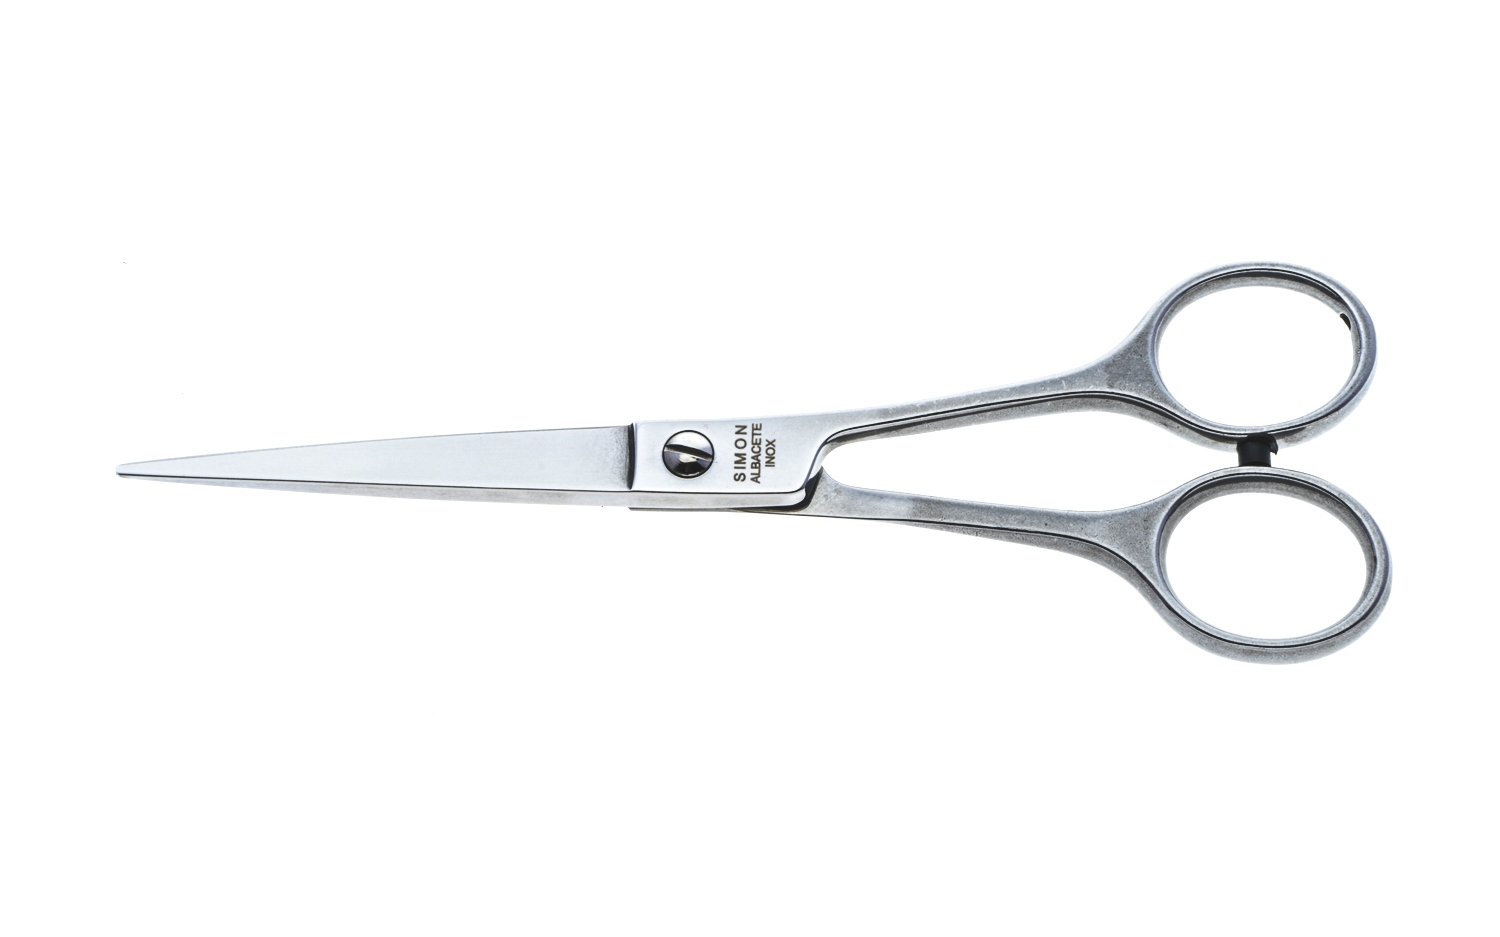  Scissors - Stainless Steel - Medium Straight - 5 inch